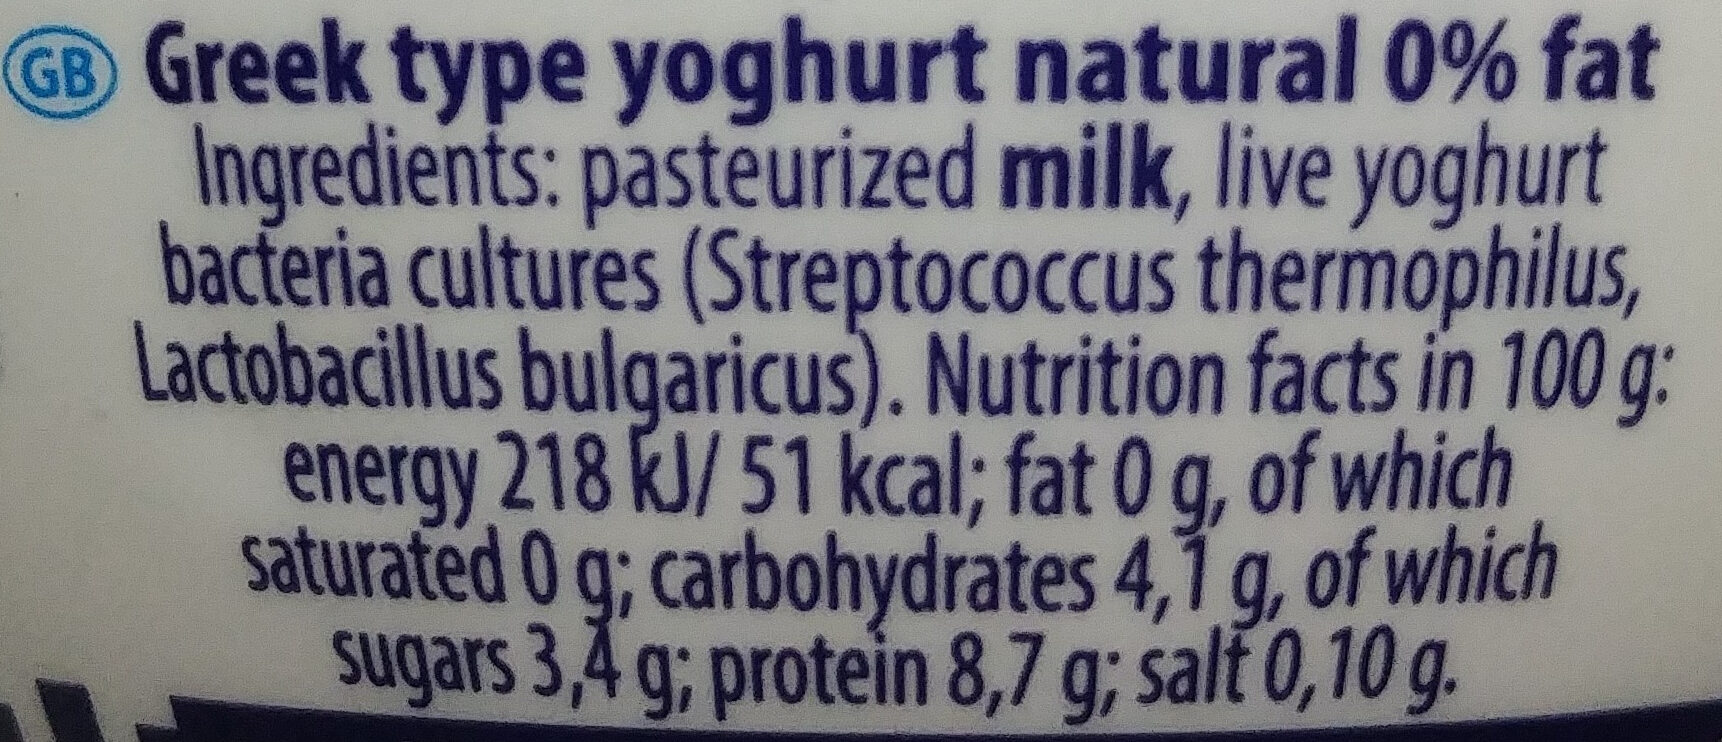 Greek Jogurt - Ingredients